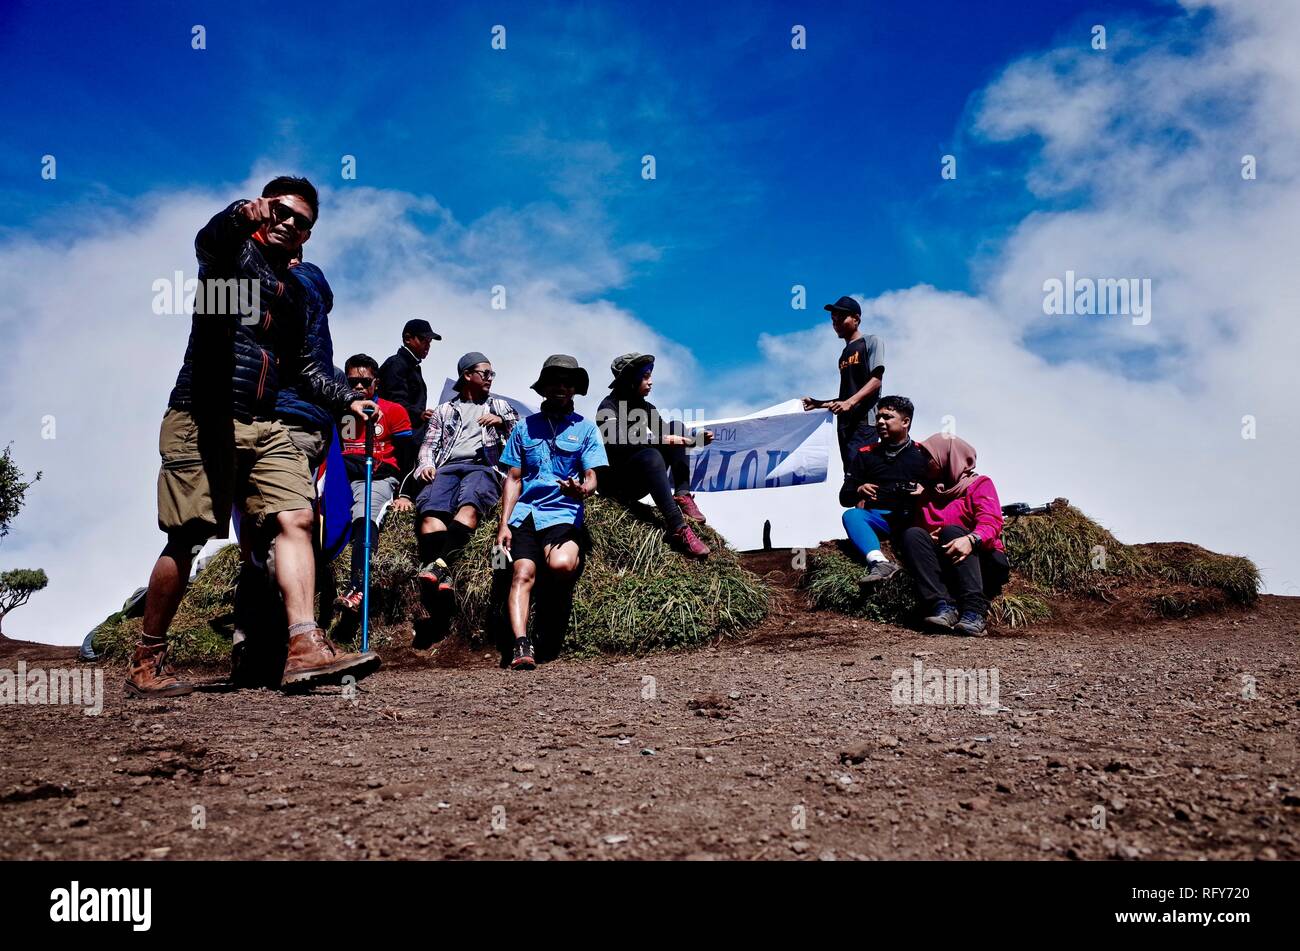 Mount Merbabu hiking experience Stock Photo